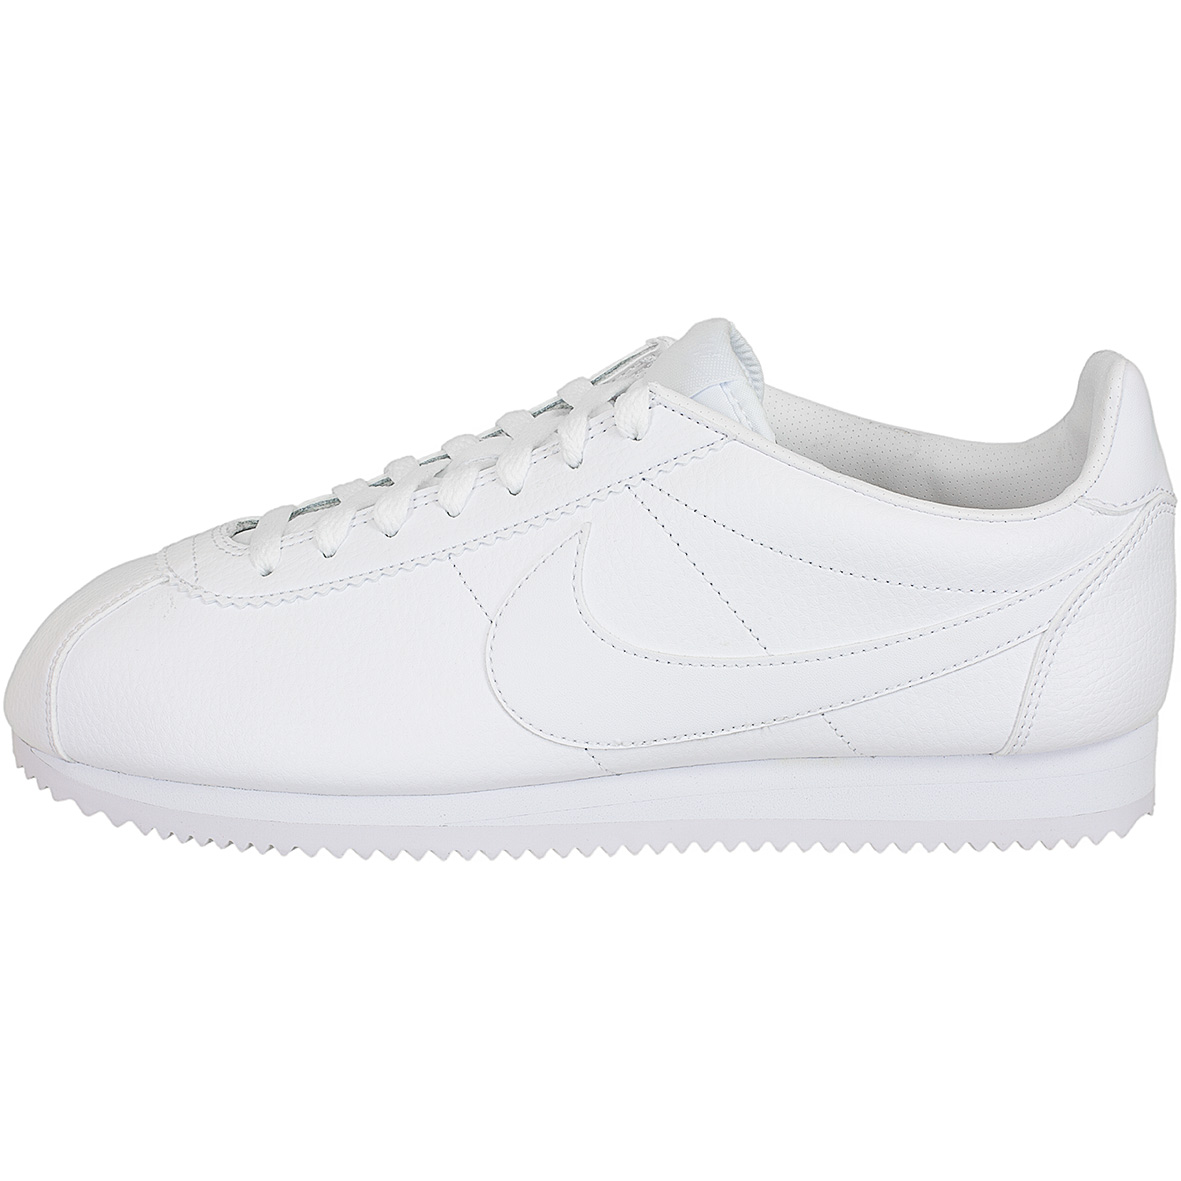 ☆ Nike Sneaker Classic Cortez Leather weiß/weiß - hier bestellen!